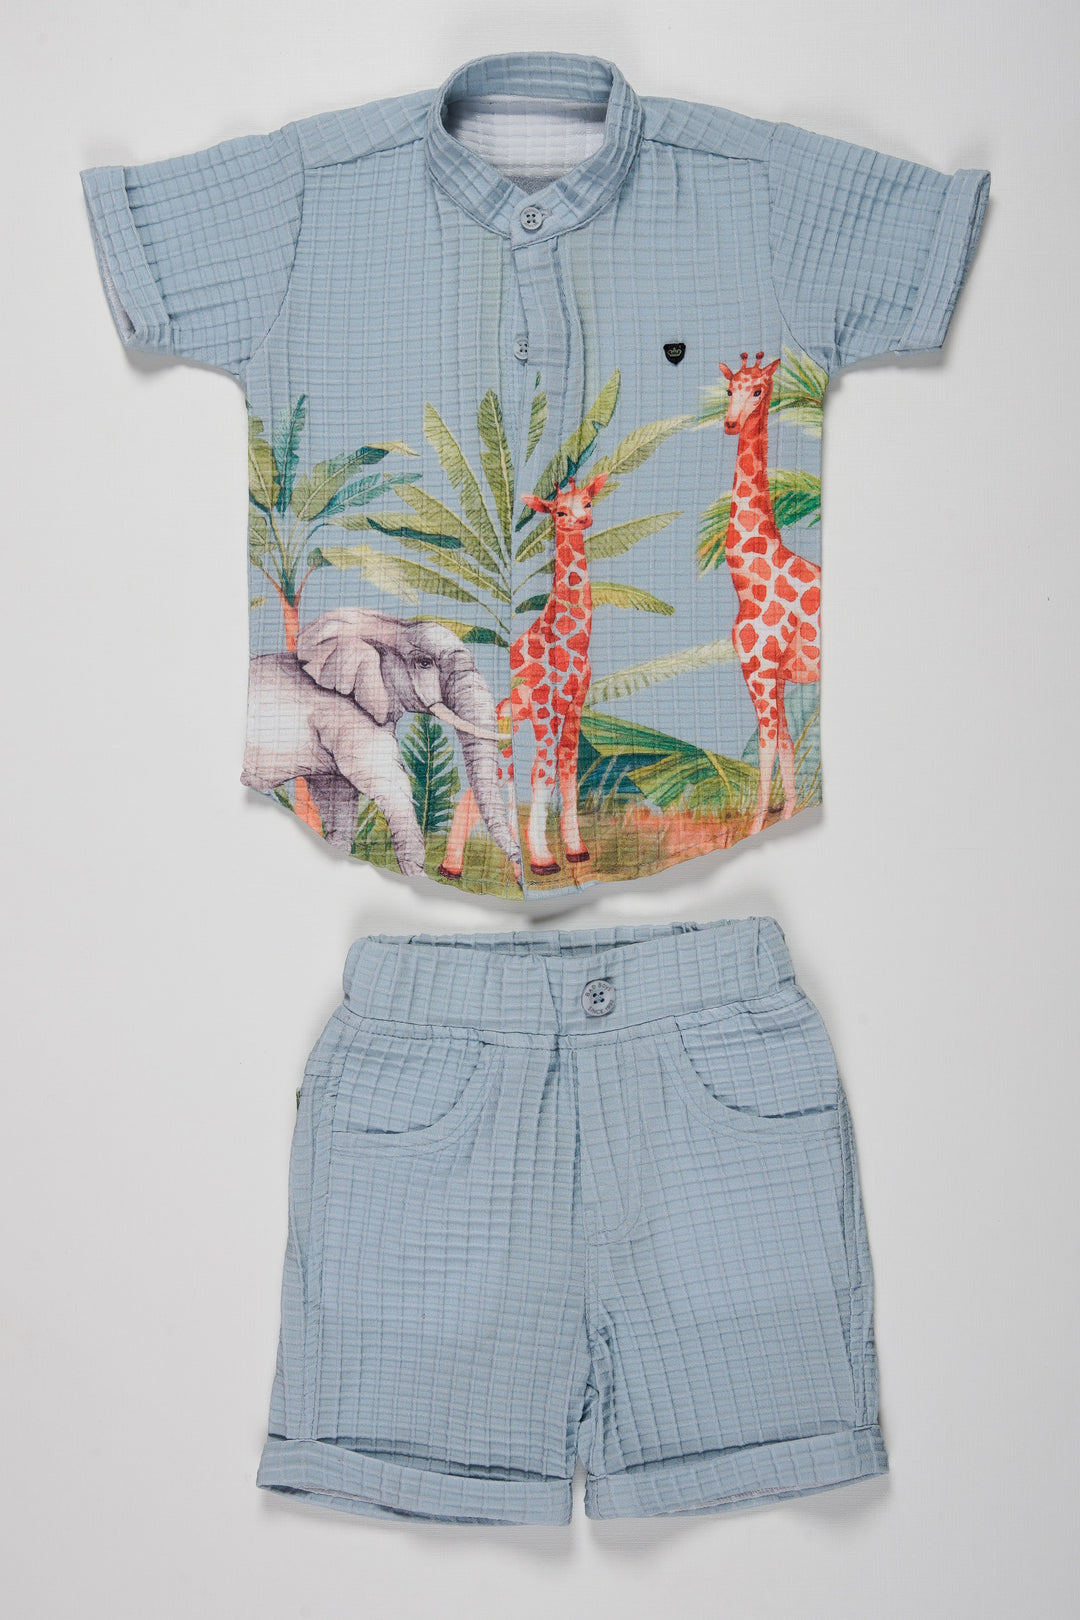 The Nesavu Boys Casual Set Boys Safari-Inspired Printed Shirt and Striped Shorts Set Nesavu 16 (1Y) / Green BCS028A-16 Boys Safari Shirt   Striped Shorts Set | Shop the Adventure Look | The Nesavu